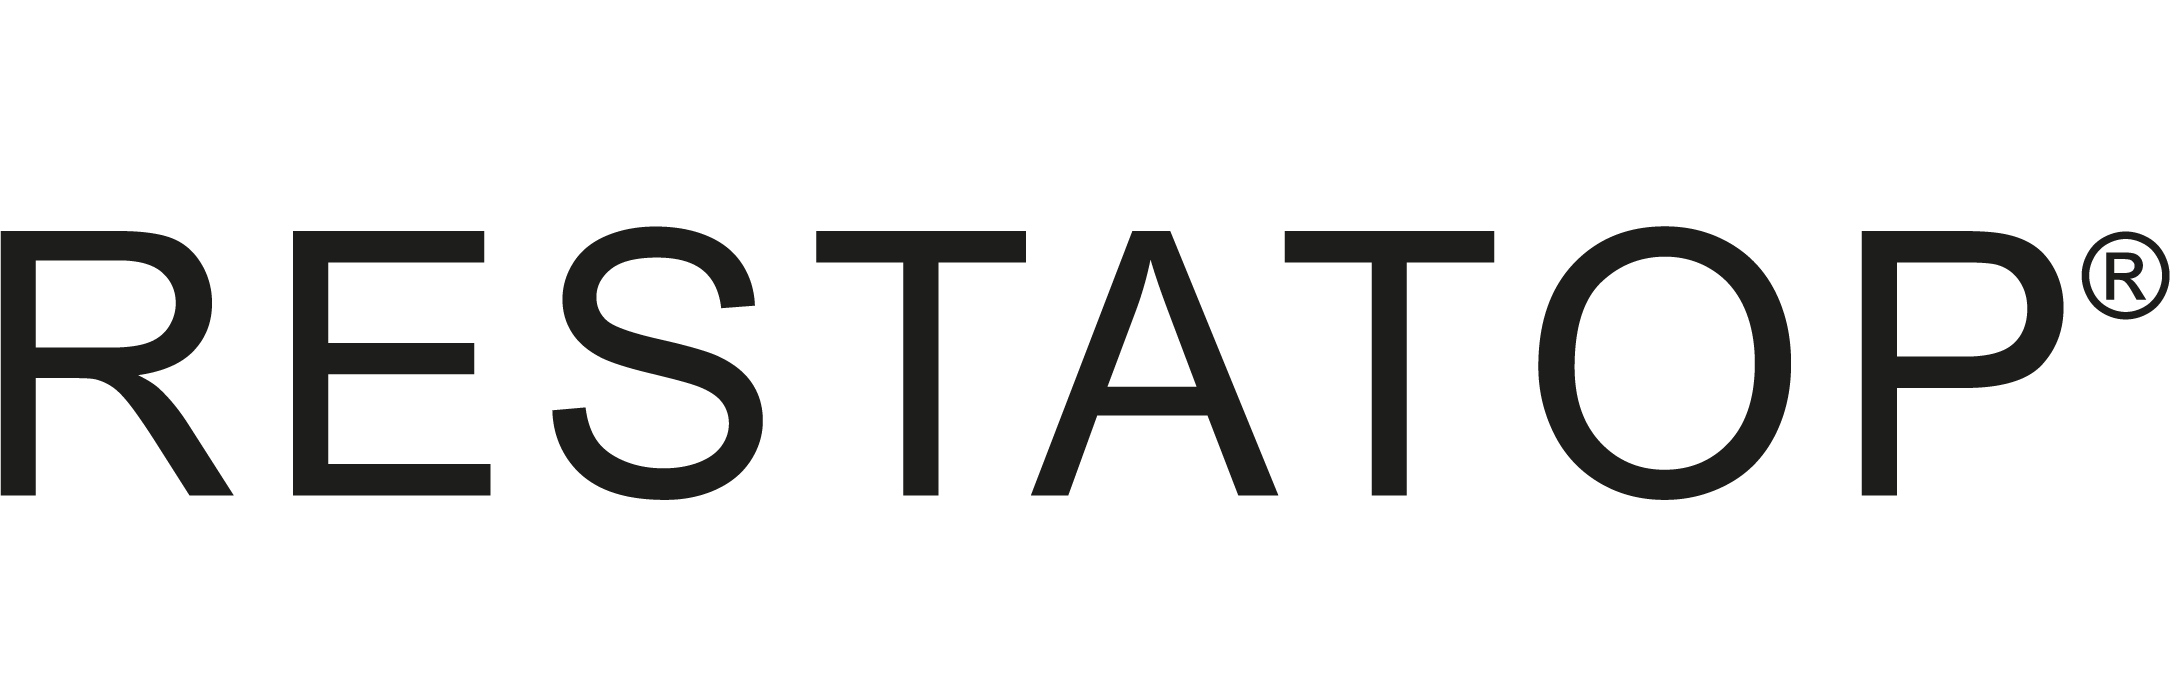 Restatop logo